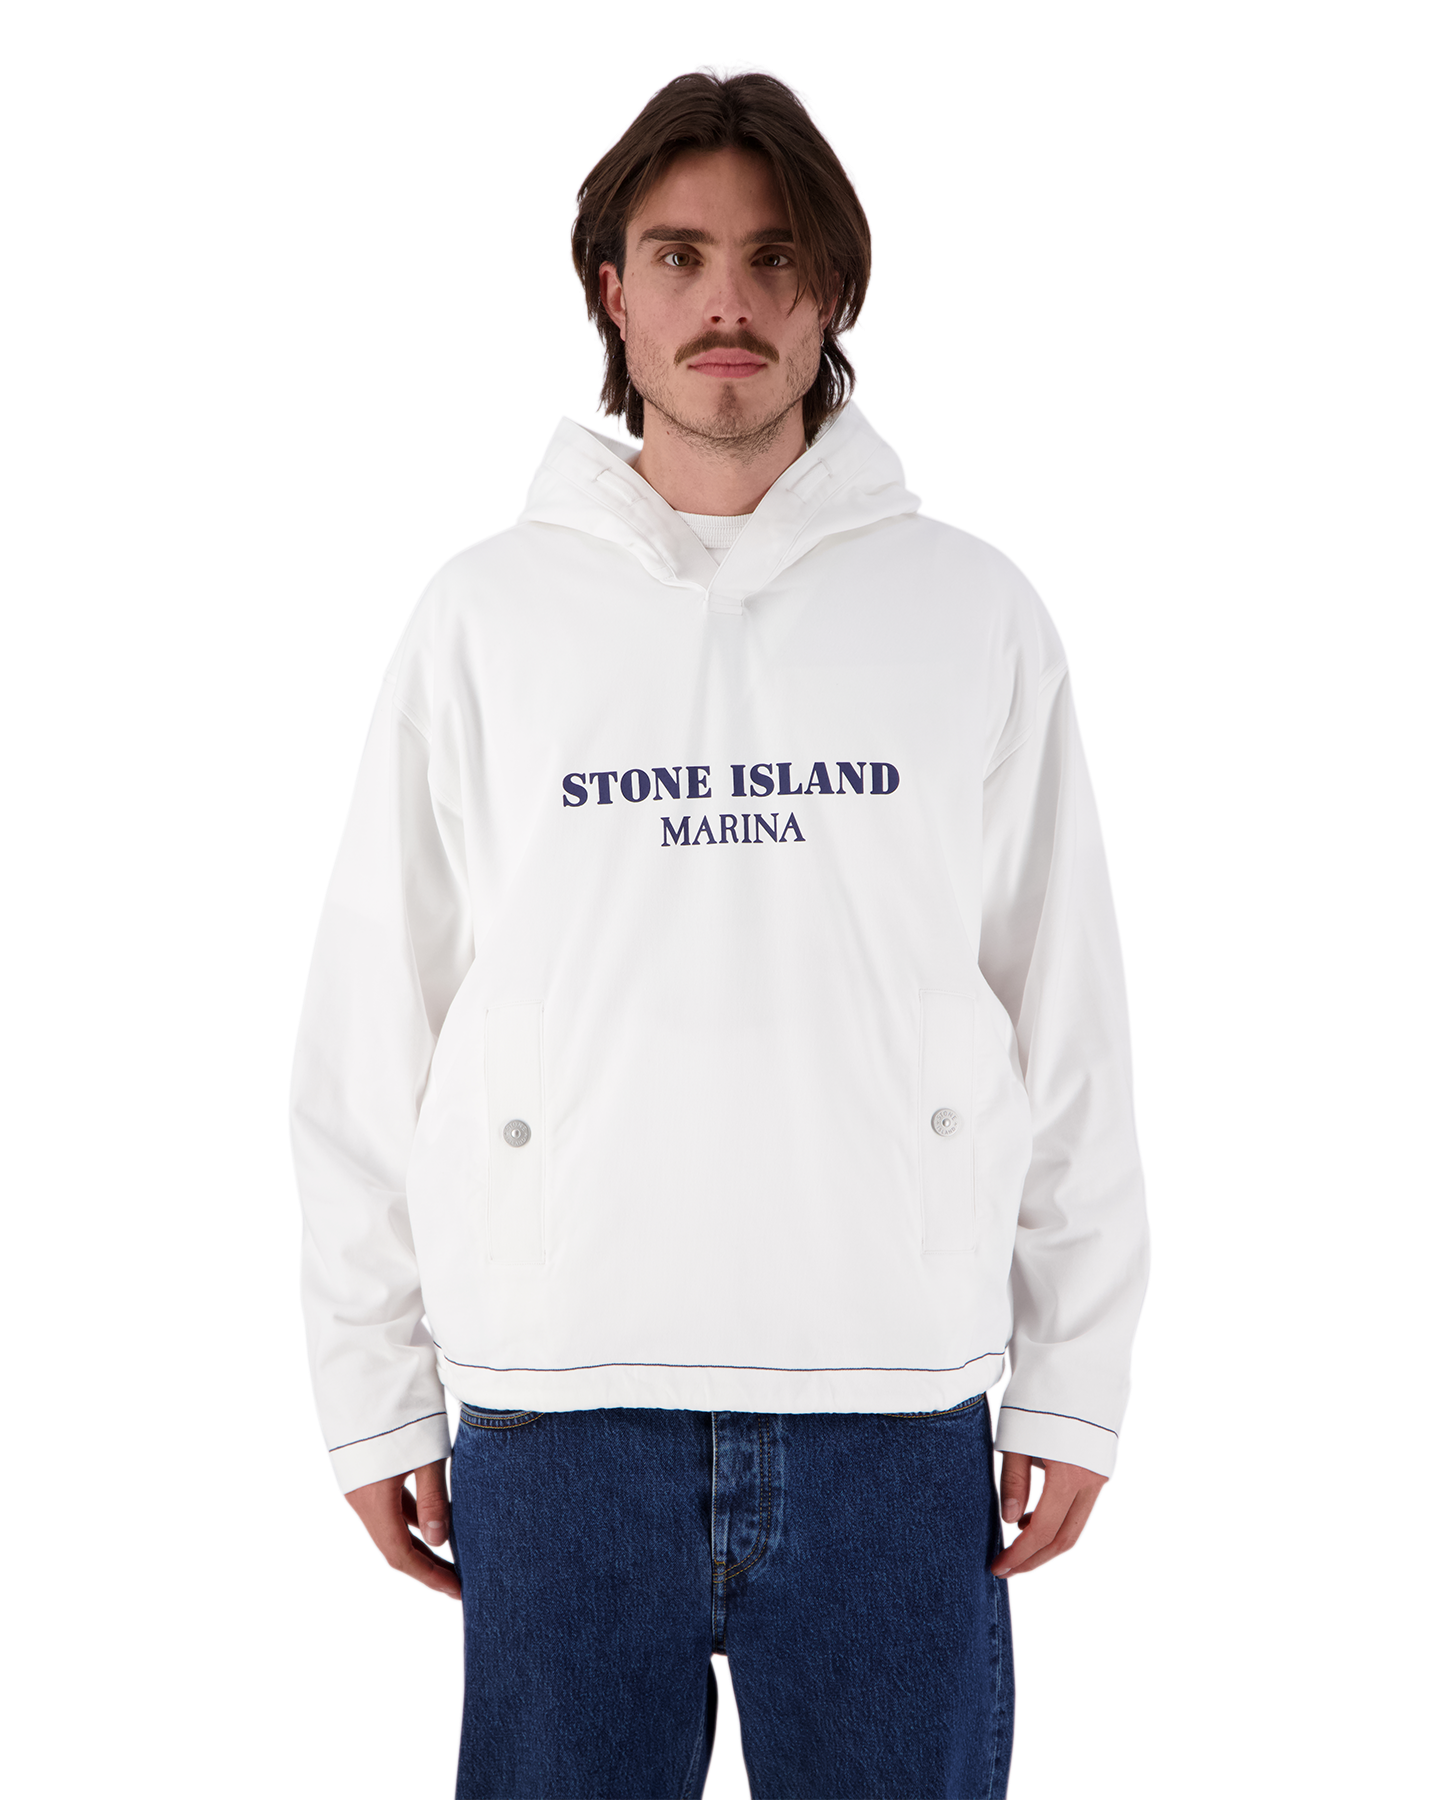 Stone Island 614X2 Stone Island Marina - Heavy Cotton Jersey Garment Dyed 'Old' Effect Hooded Sweatshirt WIT 5